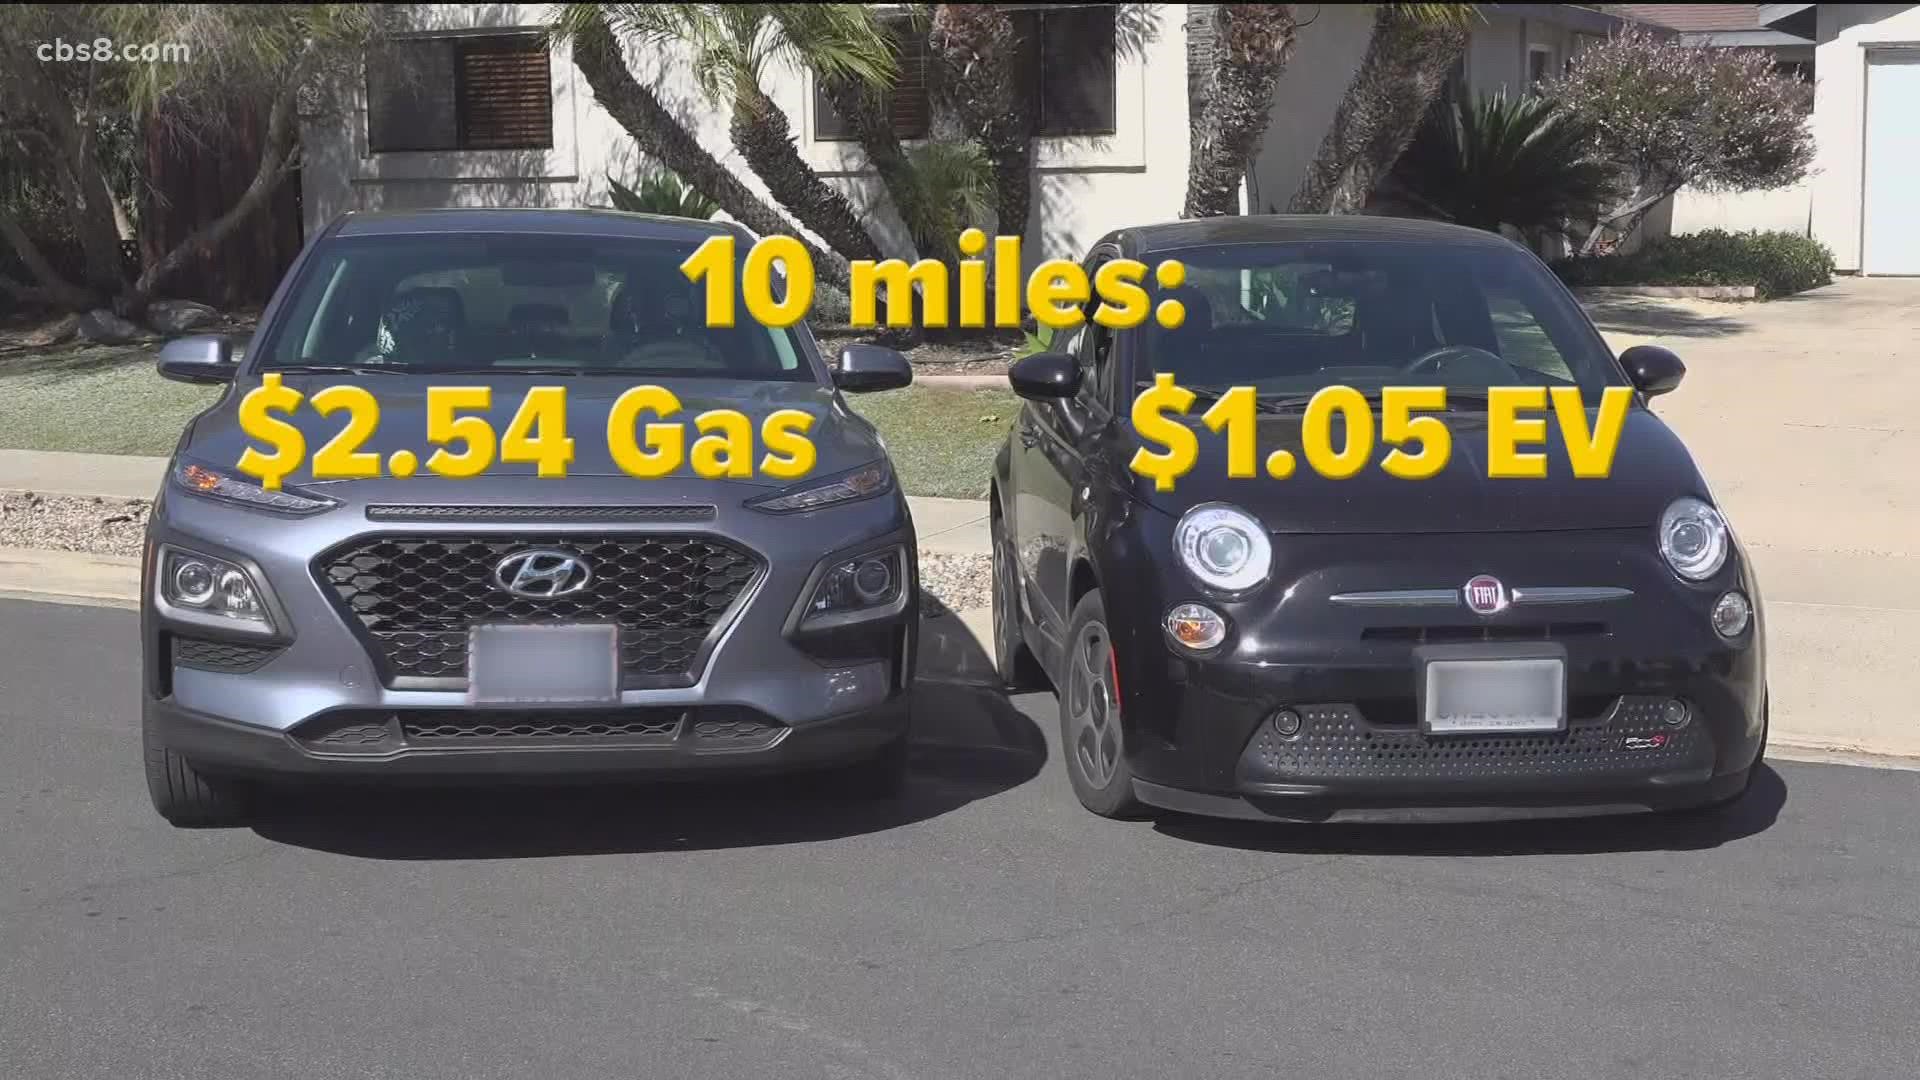 CBS 8 looks at a 2018 Hyundai gasoline car versus a 2019 Fiat EV.